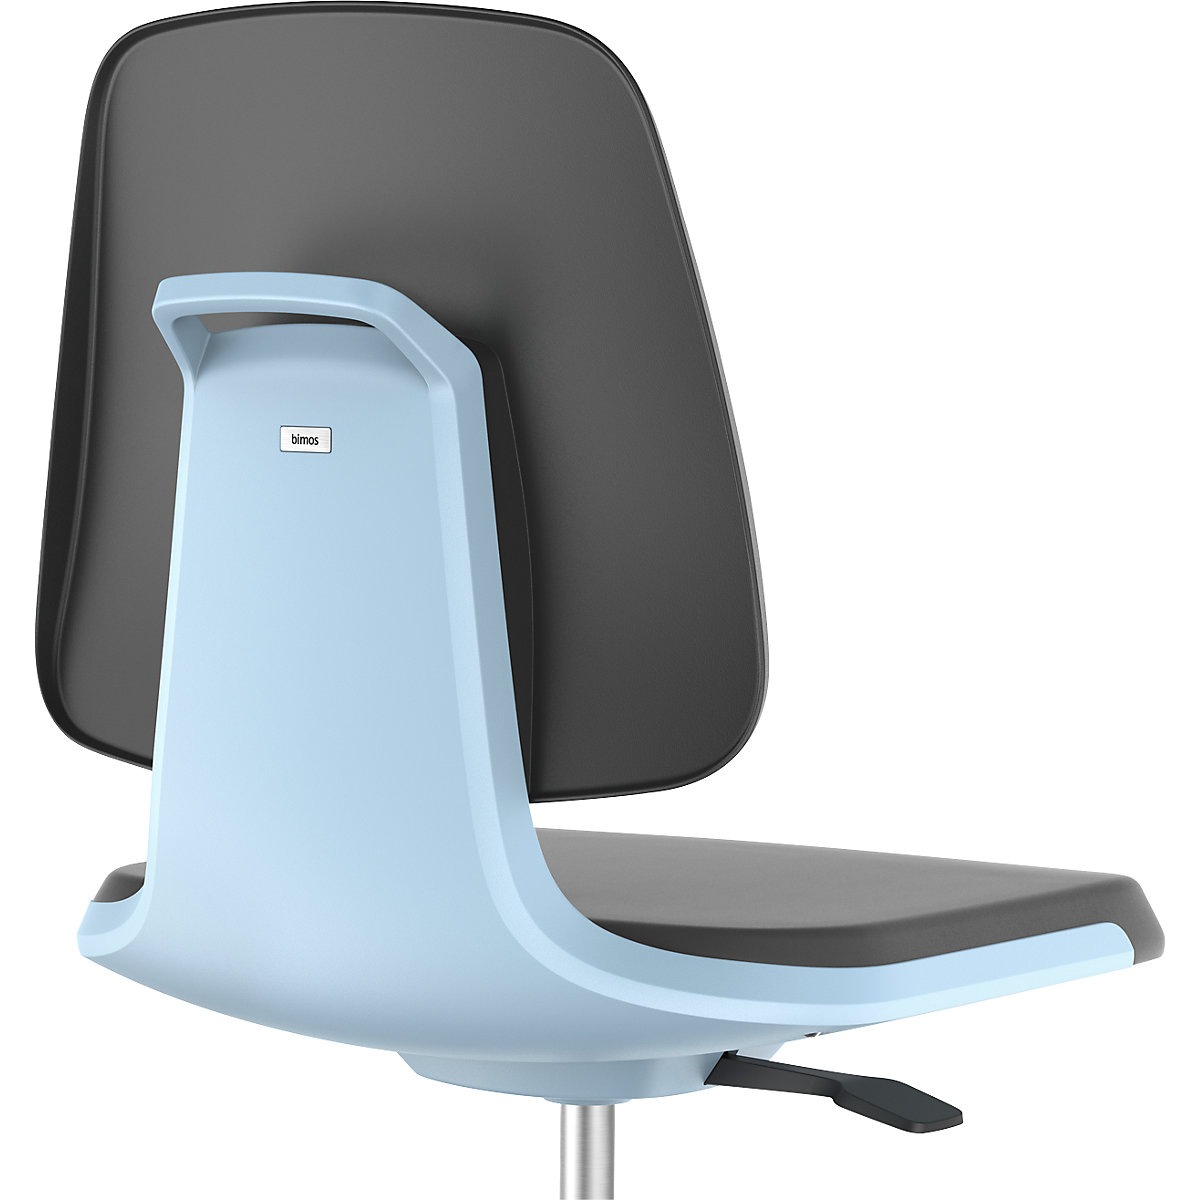 Radna okretna stolica LABSIT – bimos (Prikaz proizvoda 34)-33